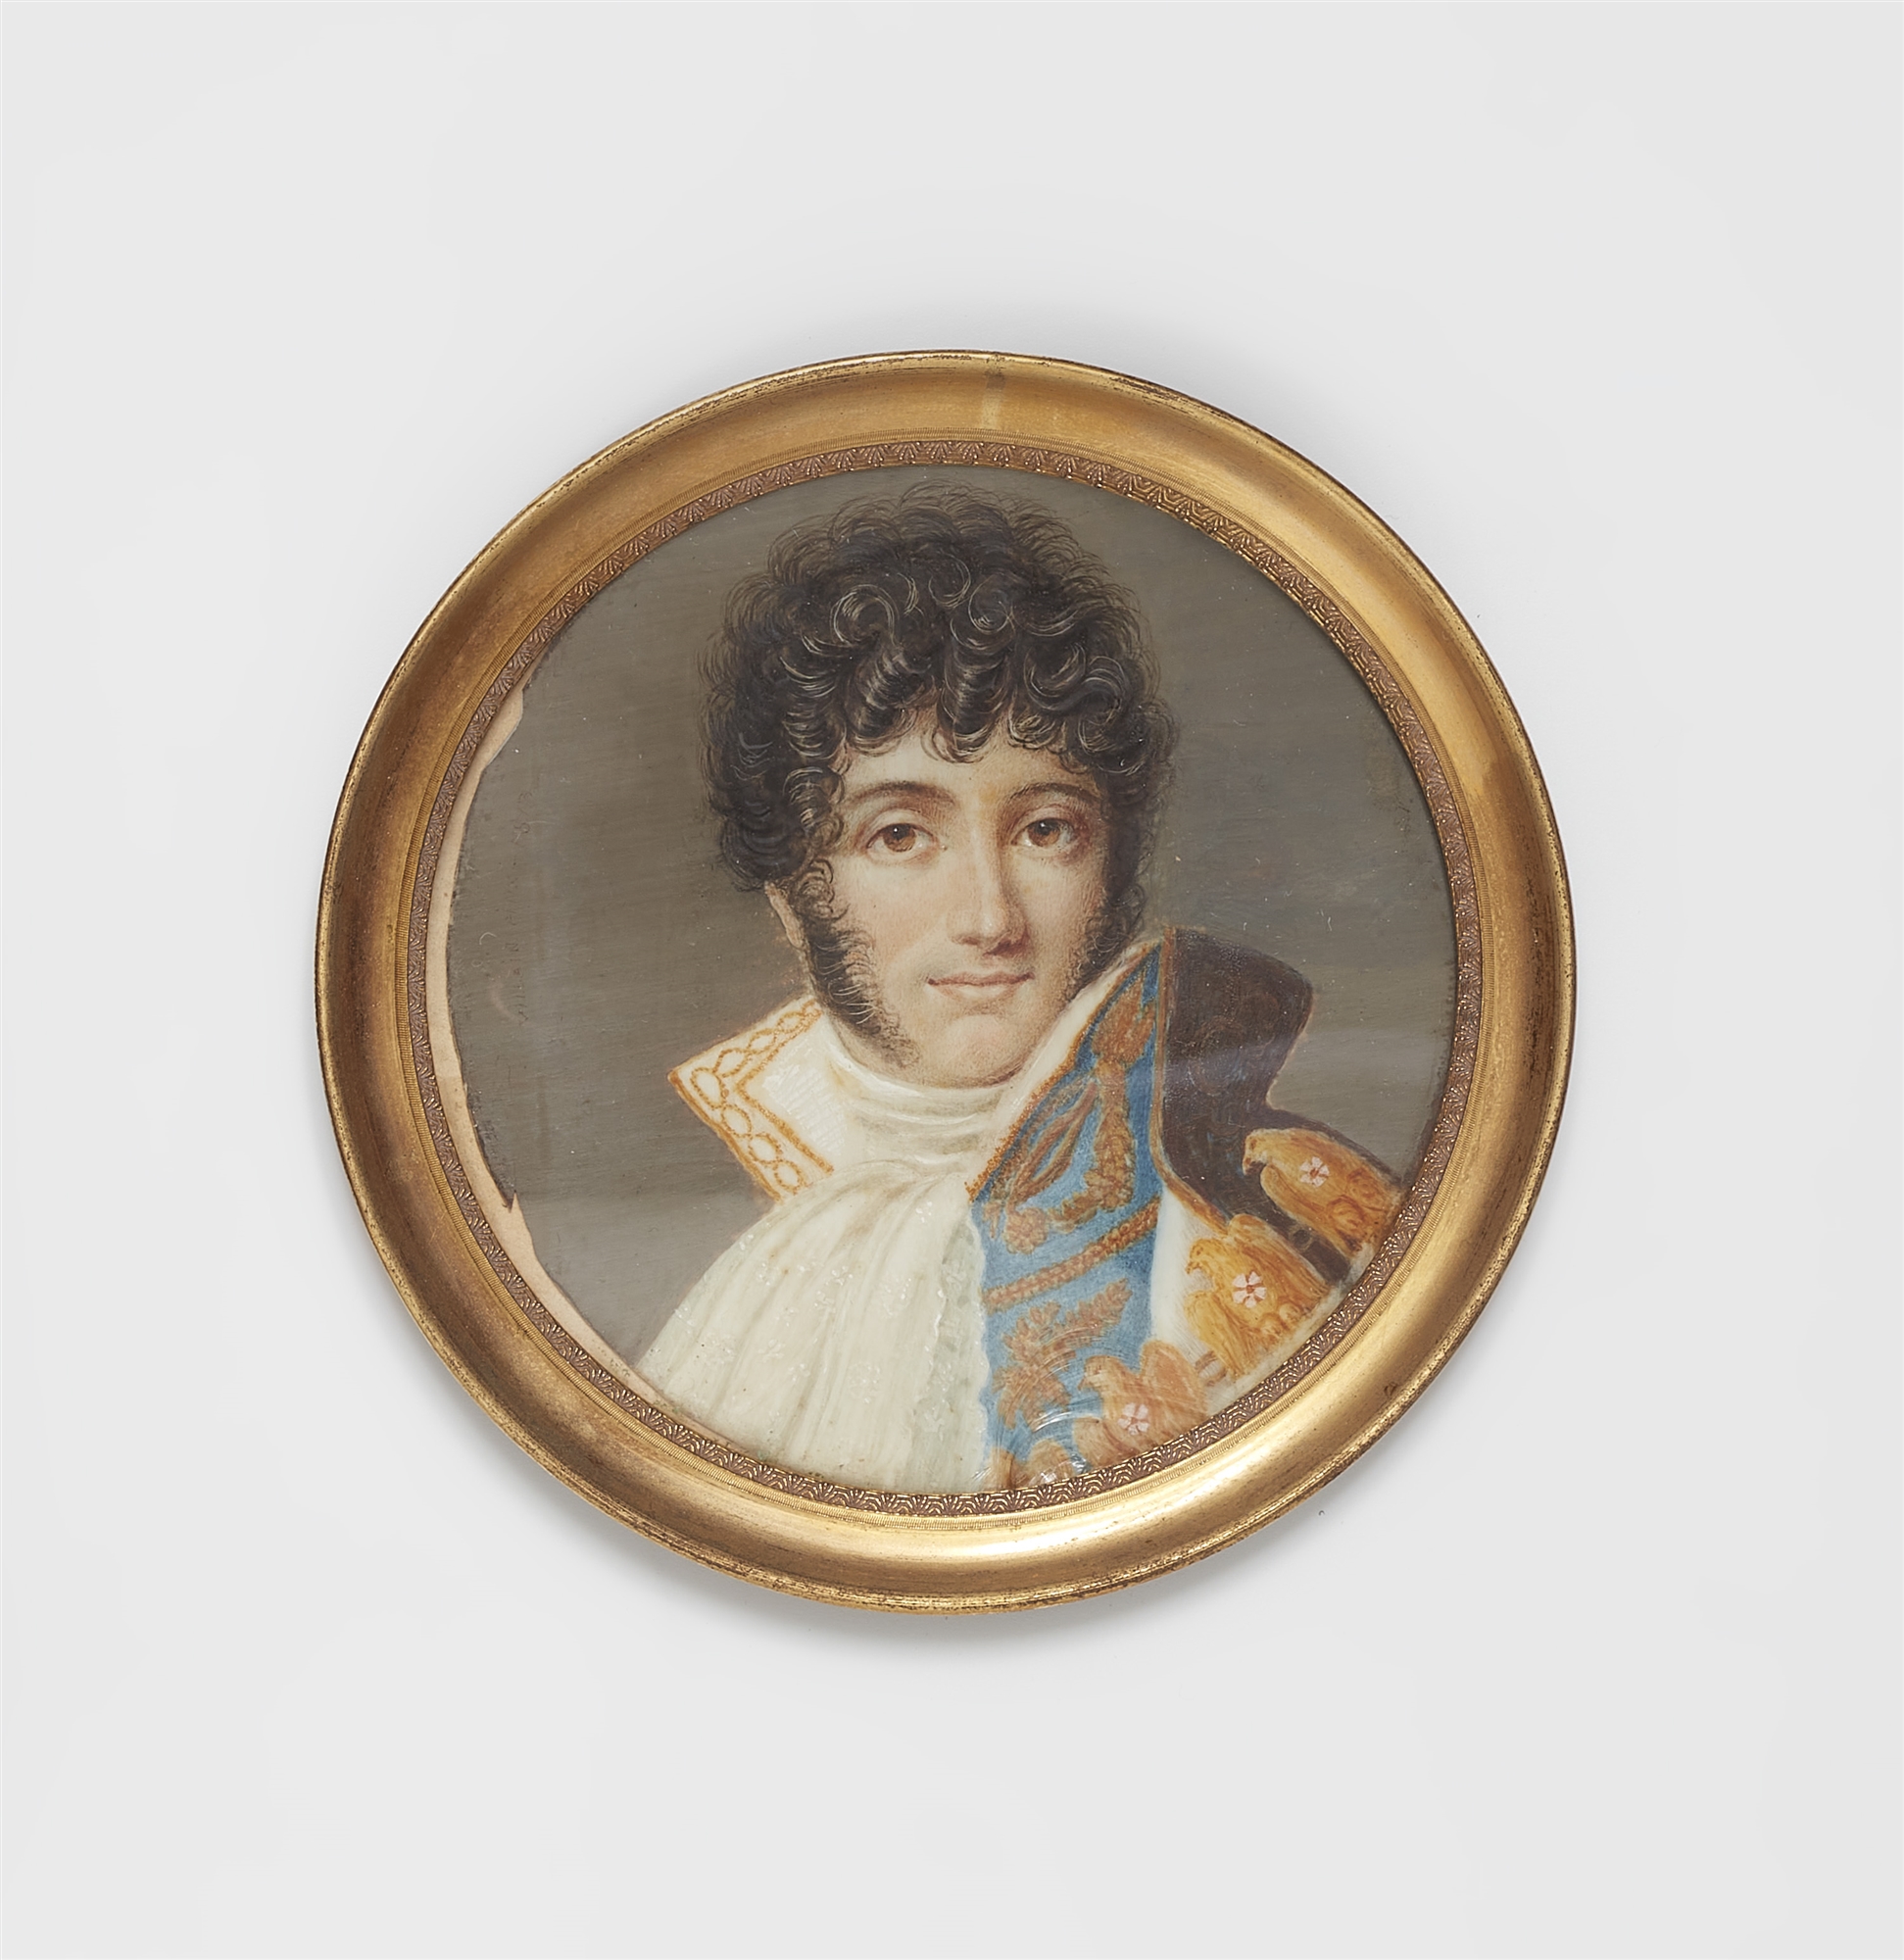 A French portrait miniature of Joachim Murat King of Naples